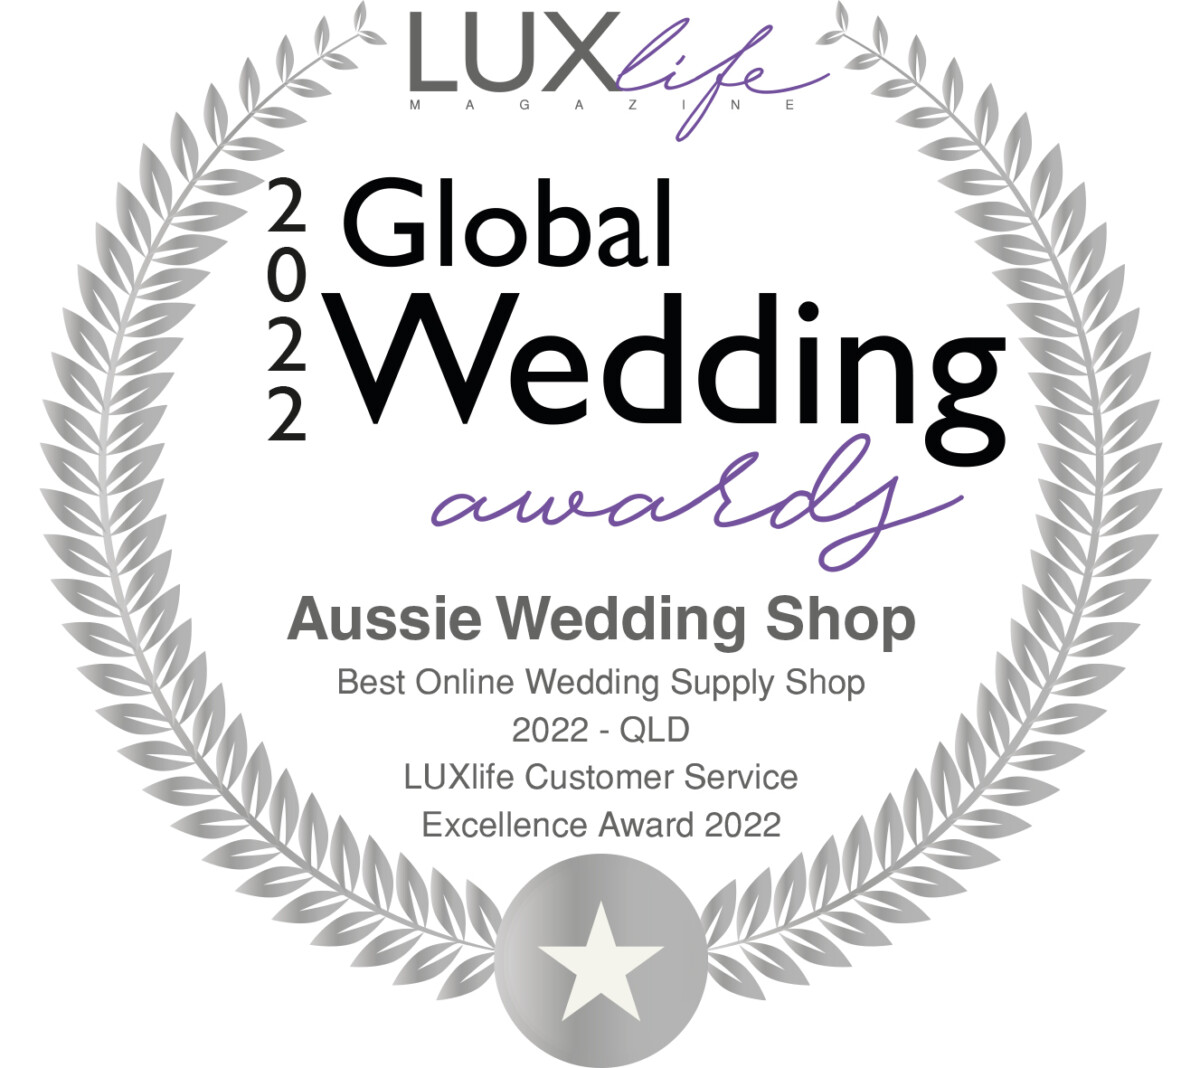 Apr22198 - Aussie Wedding Shop - 2022 Global Wedding Awards Winn